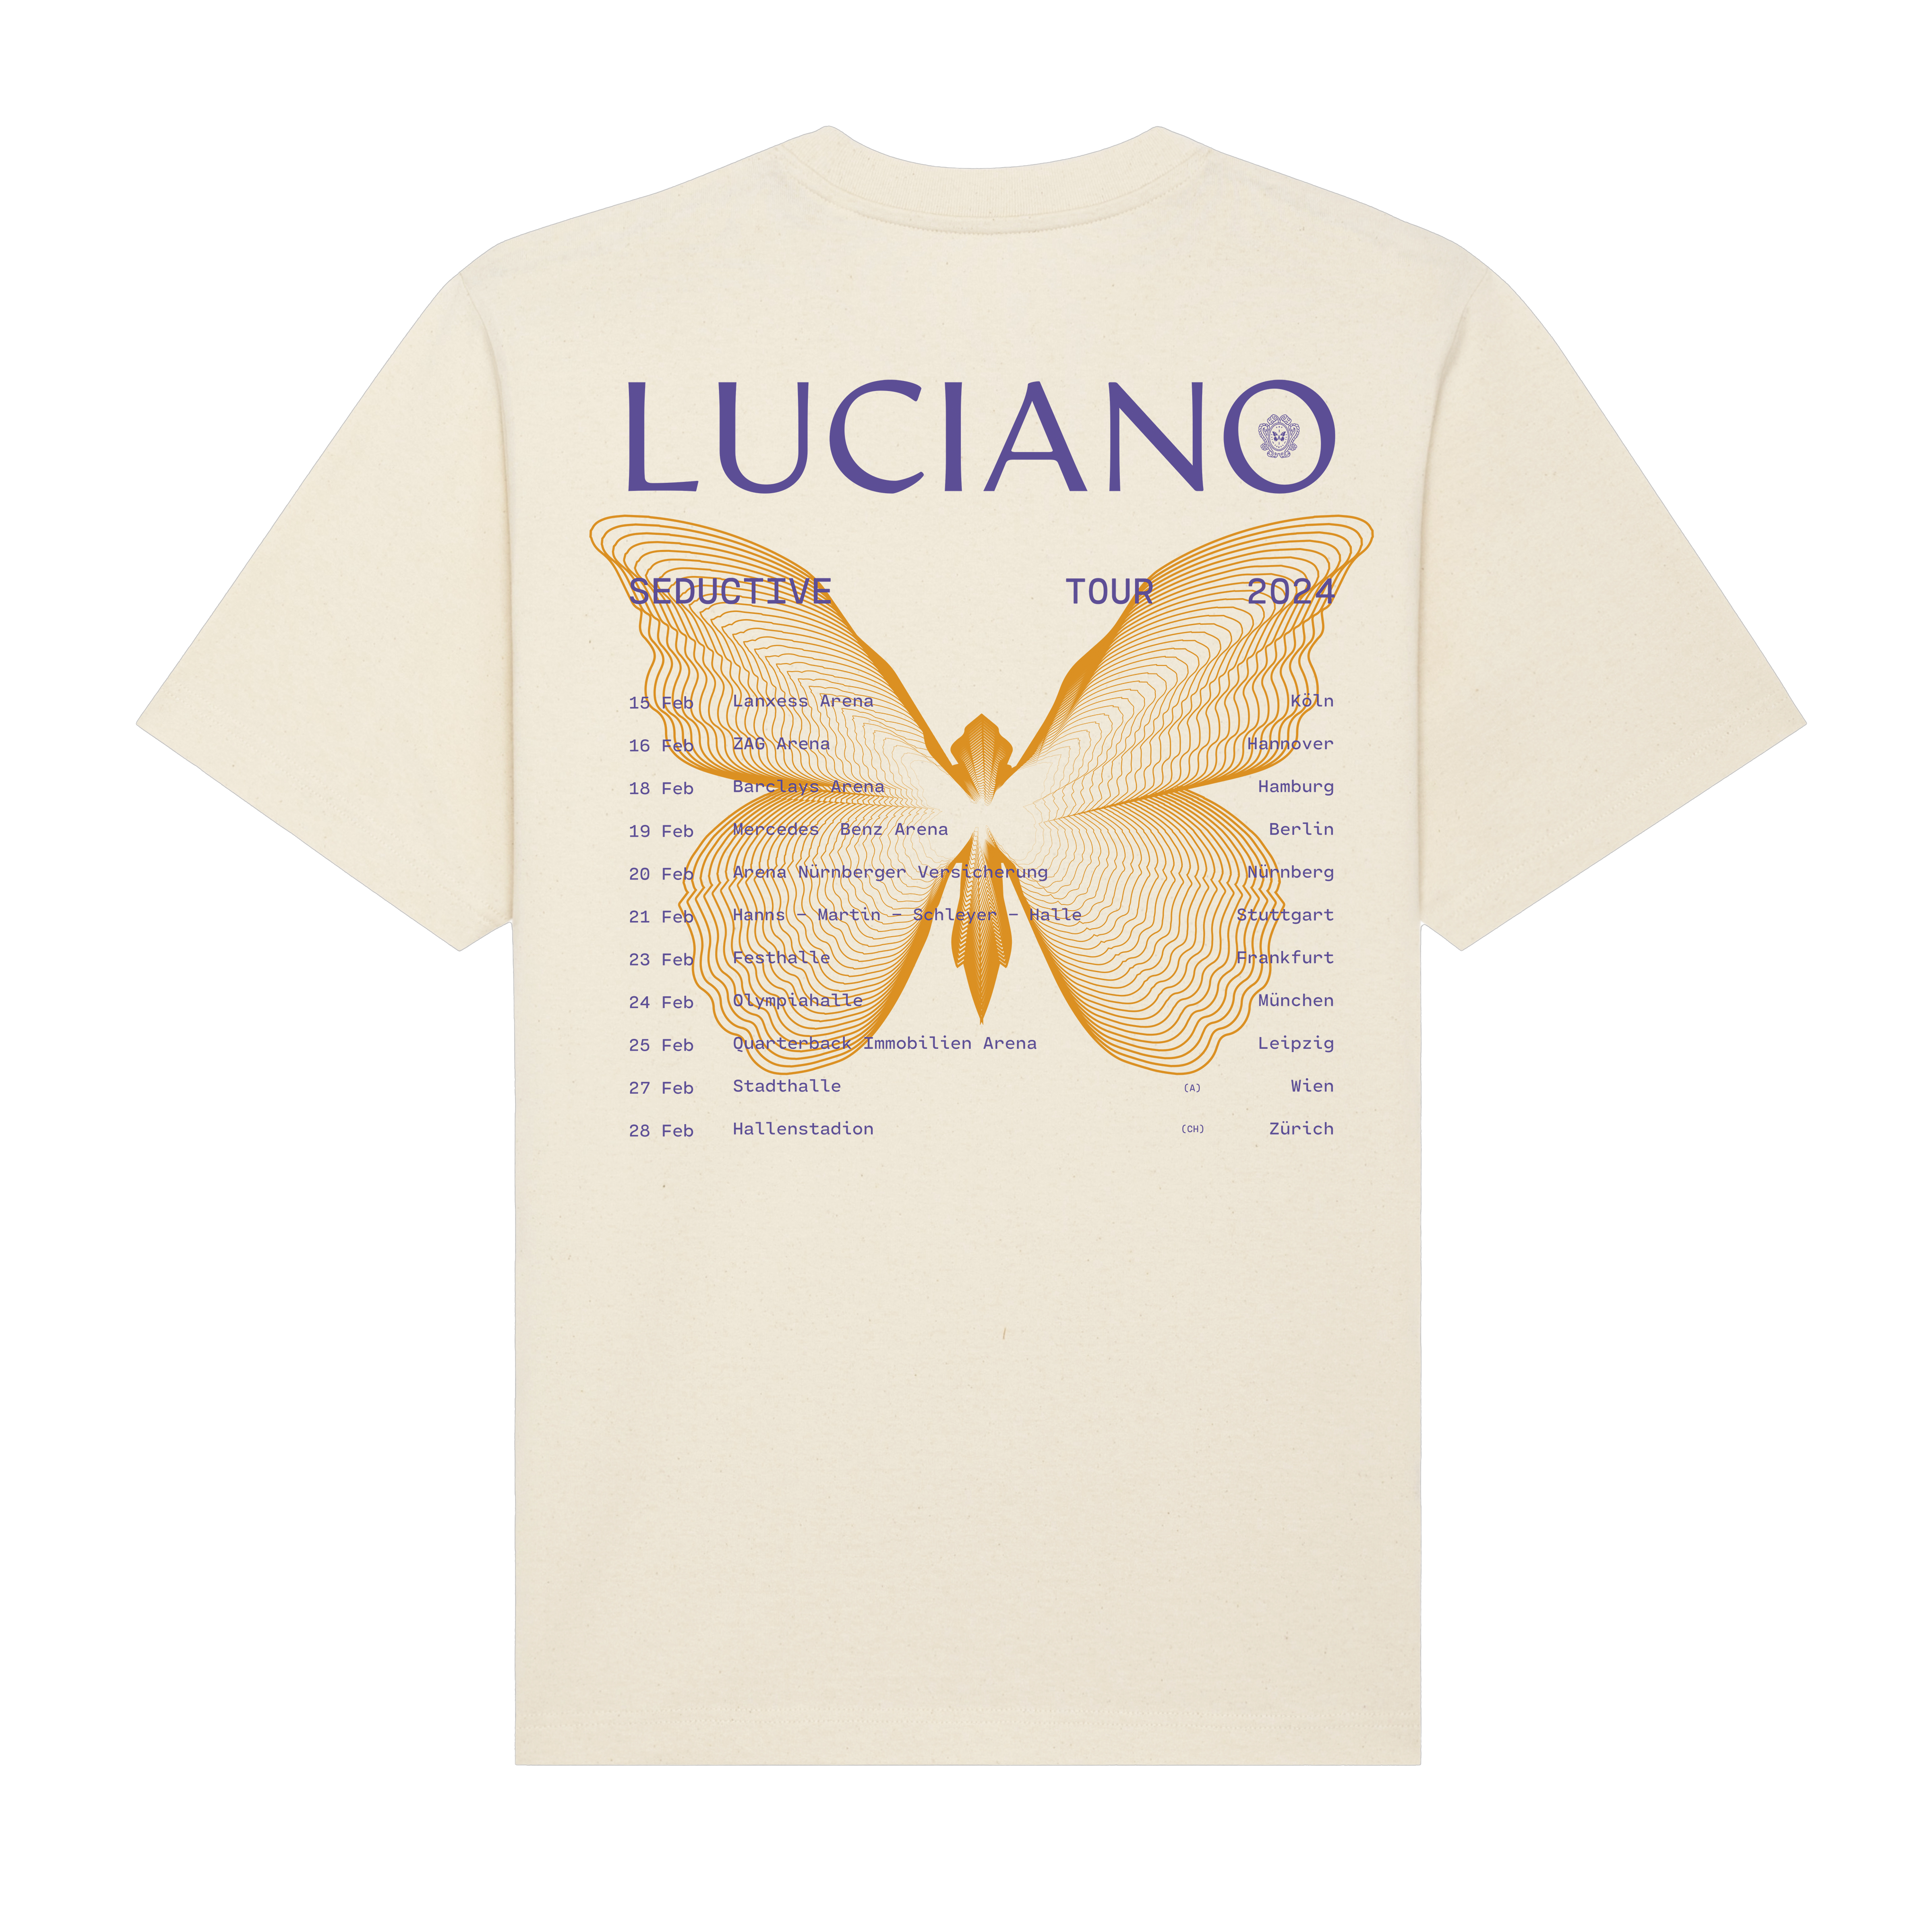 https://images.bravado.de/prod/product-assets/product-asset-data/luciano/luciano/products/506294/web/424323/image-thumb__424323__3000x3000_original/Luciano-Butterfly-T-Shirt-natur-506294-424323.e7641f12.png